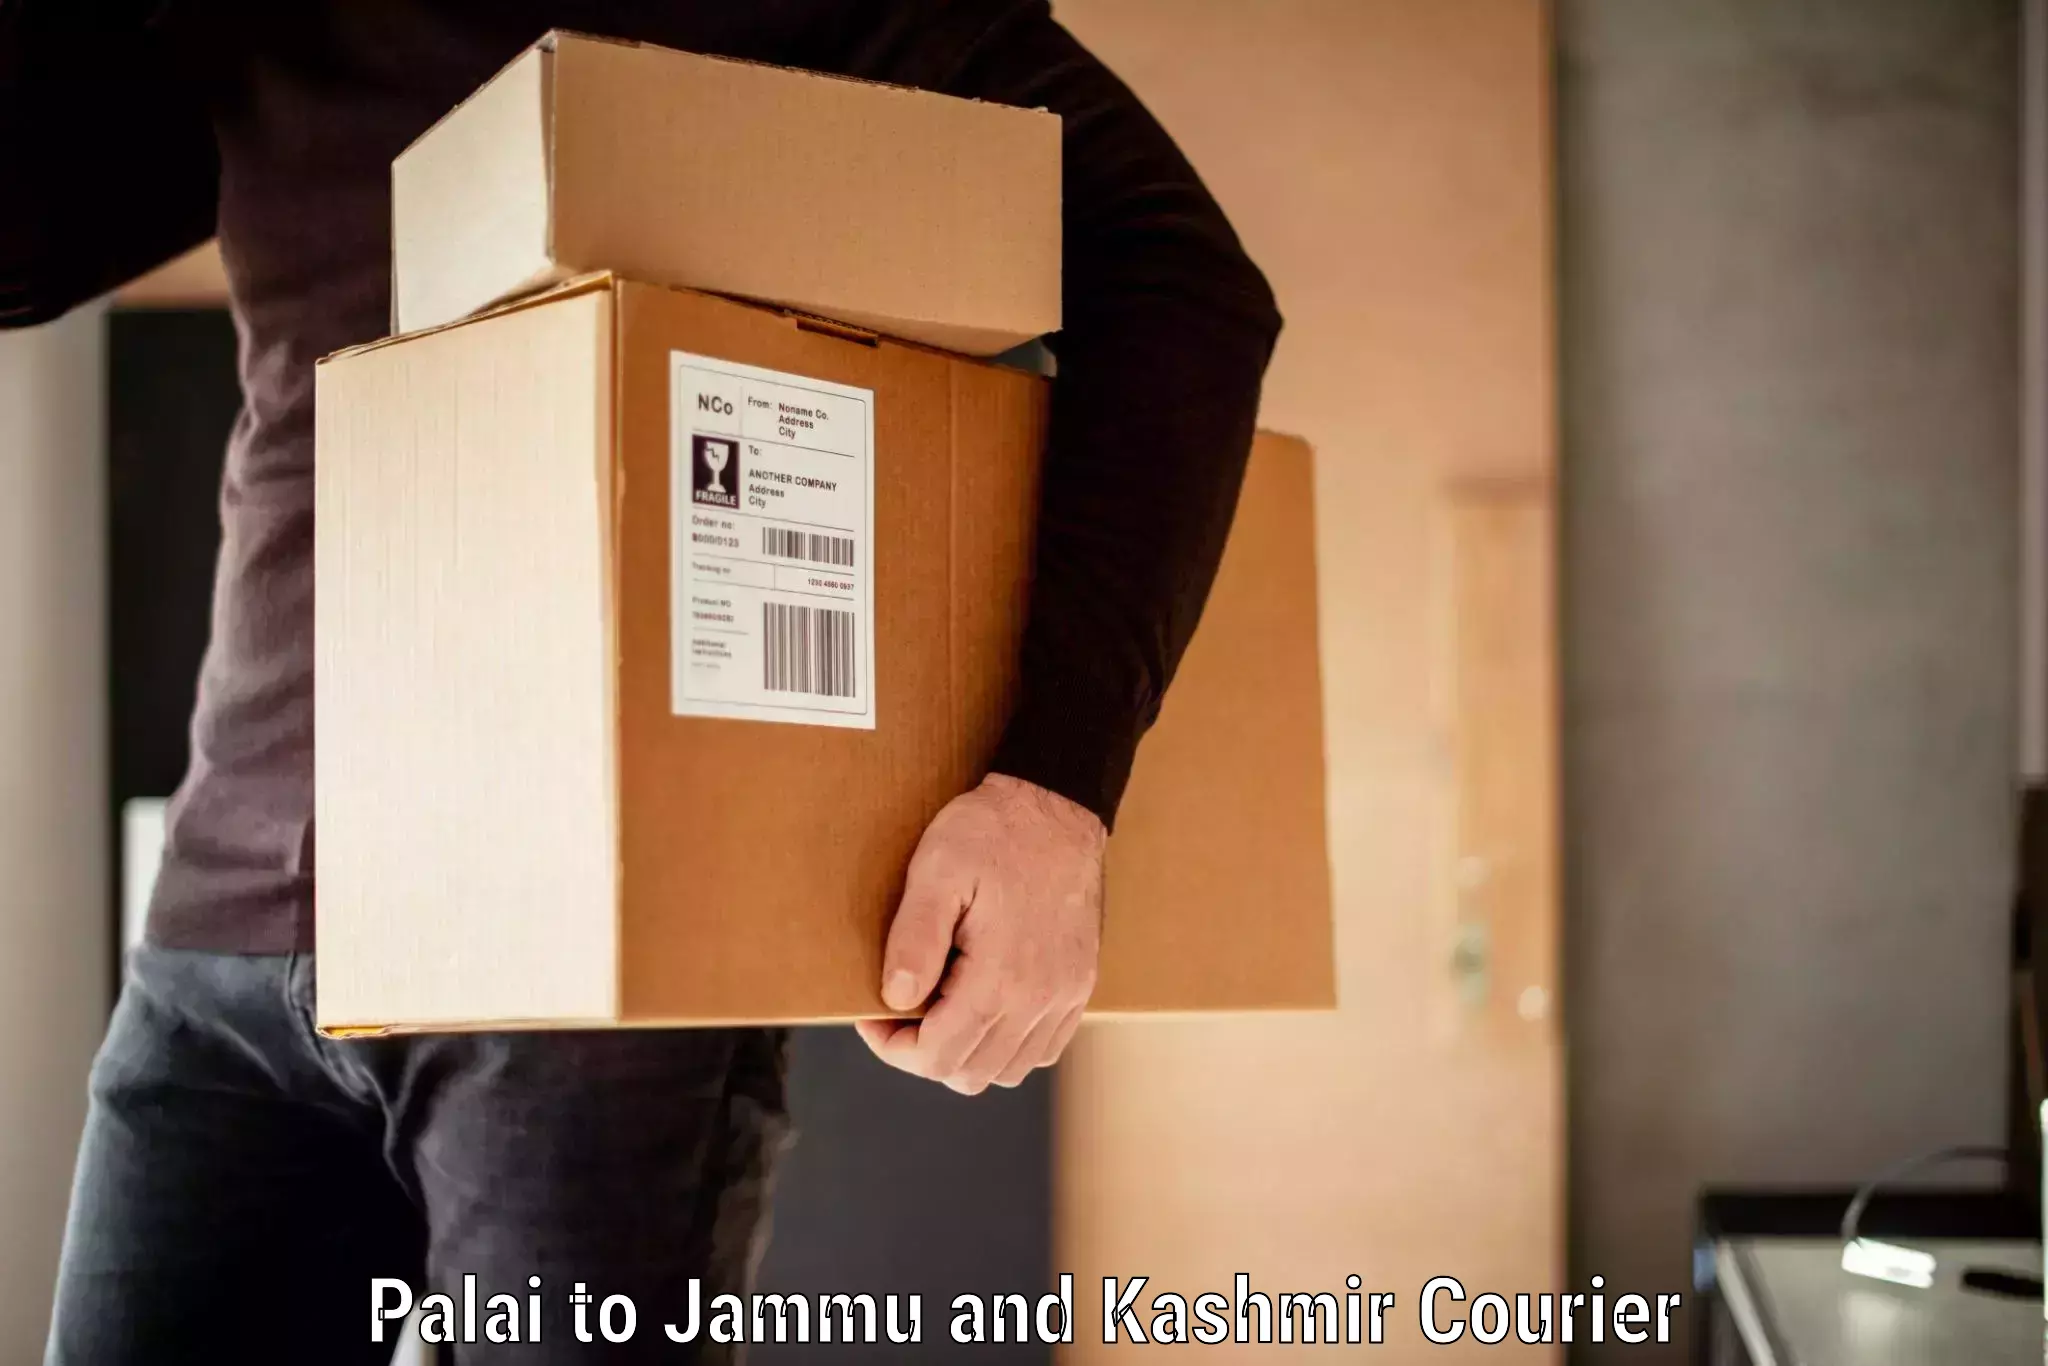 Baggage transport network Palai to Jammu and Kashmir